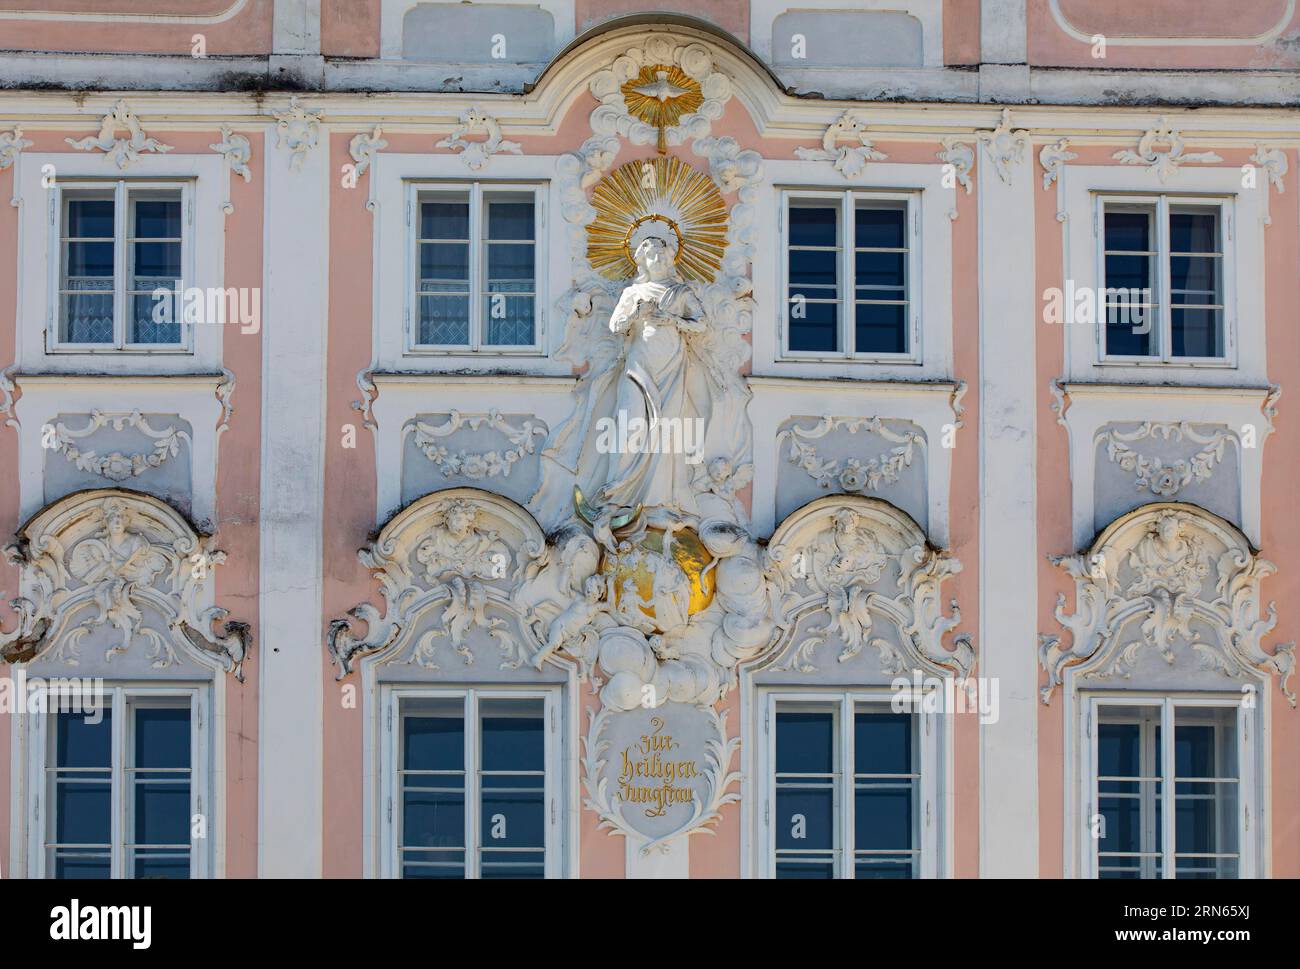 Market square with rococo stucco facades on the town houses, Obernberg am Inn, Innviertel, Upper Austria, Austria Stock Photo